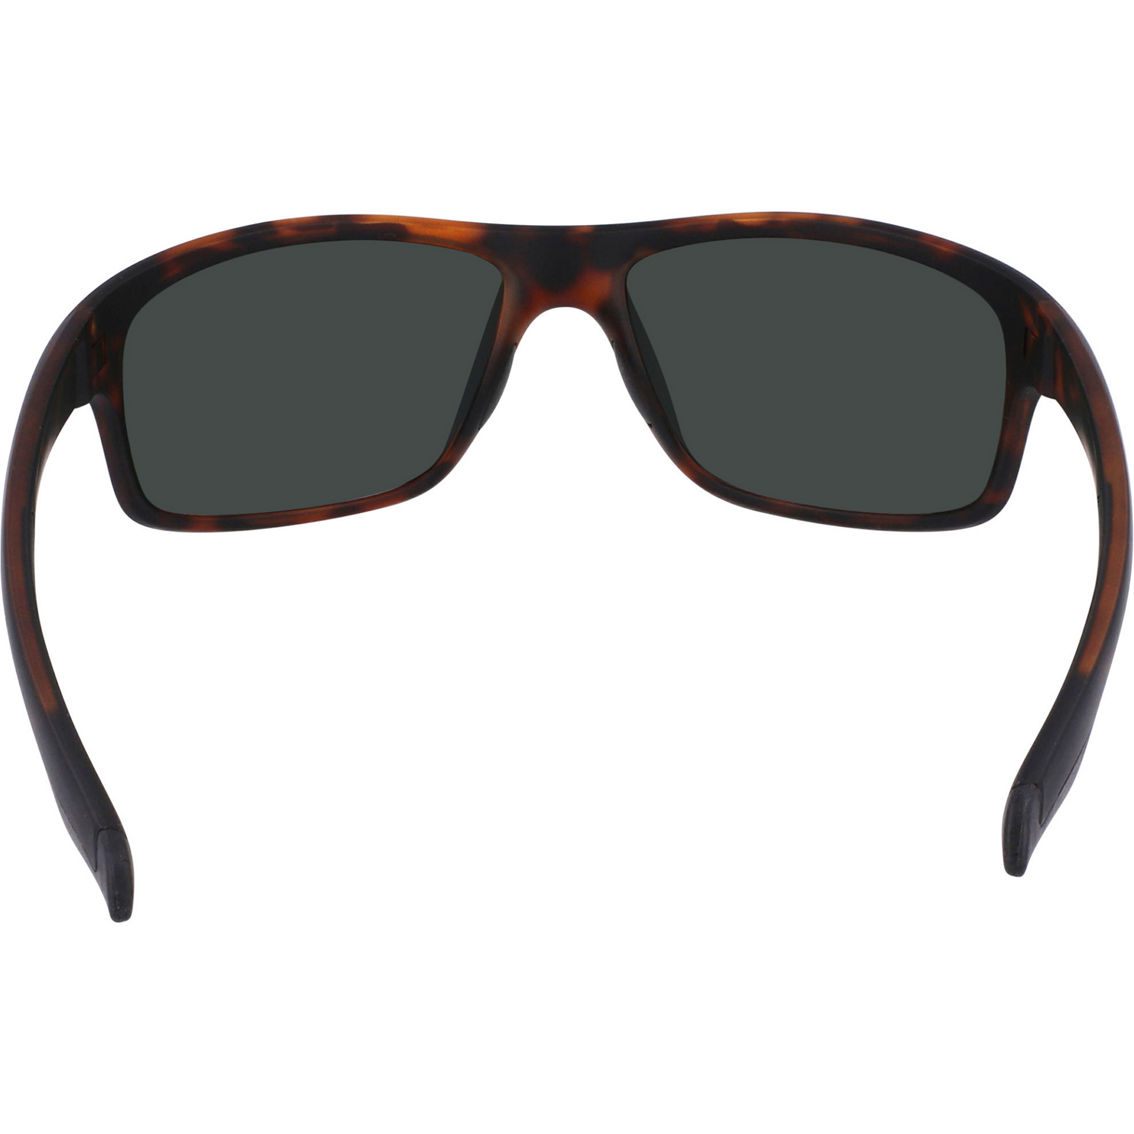 Columbia Burr Polarized Sunglasses | Sunglasses | Clothing ...